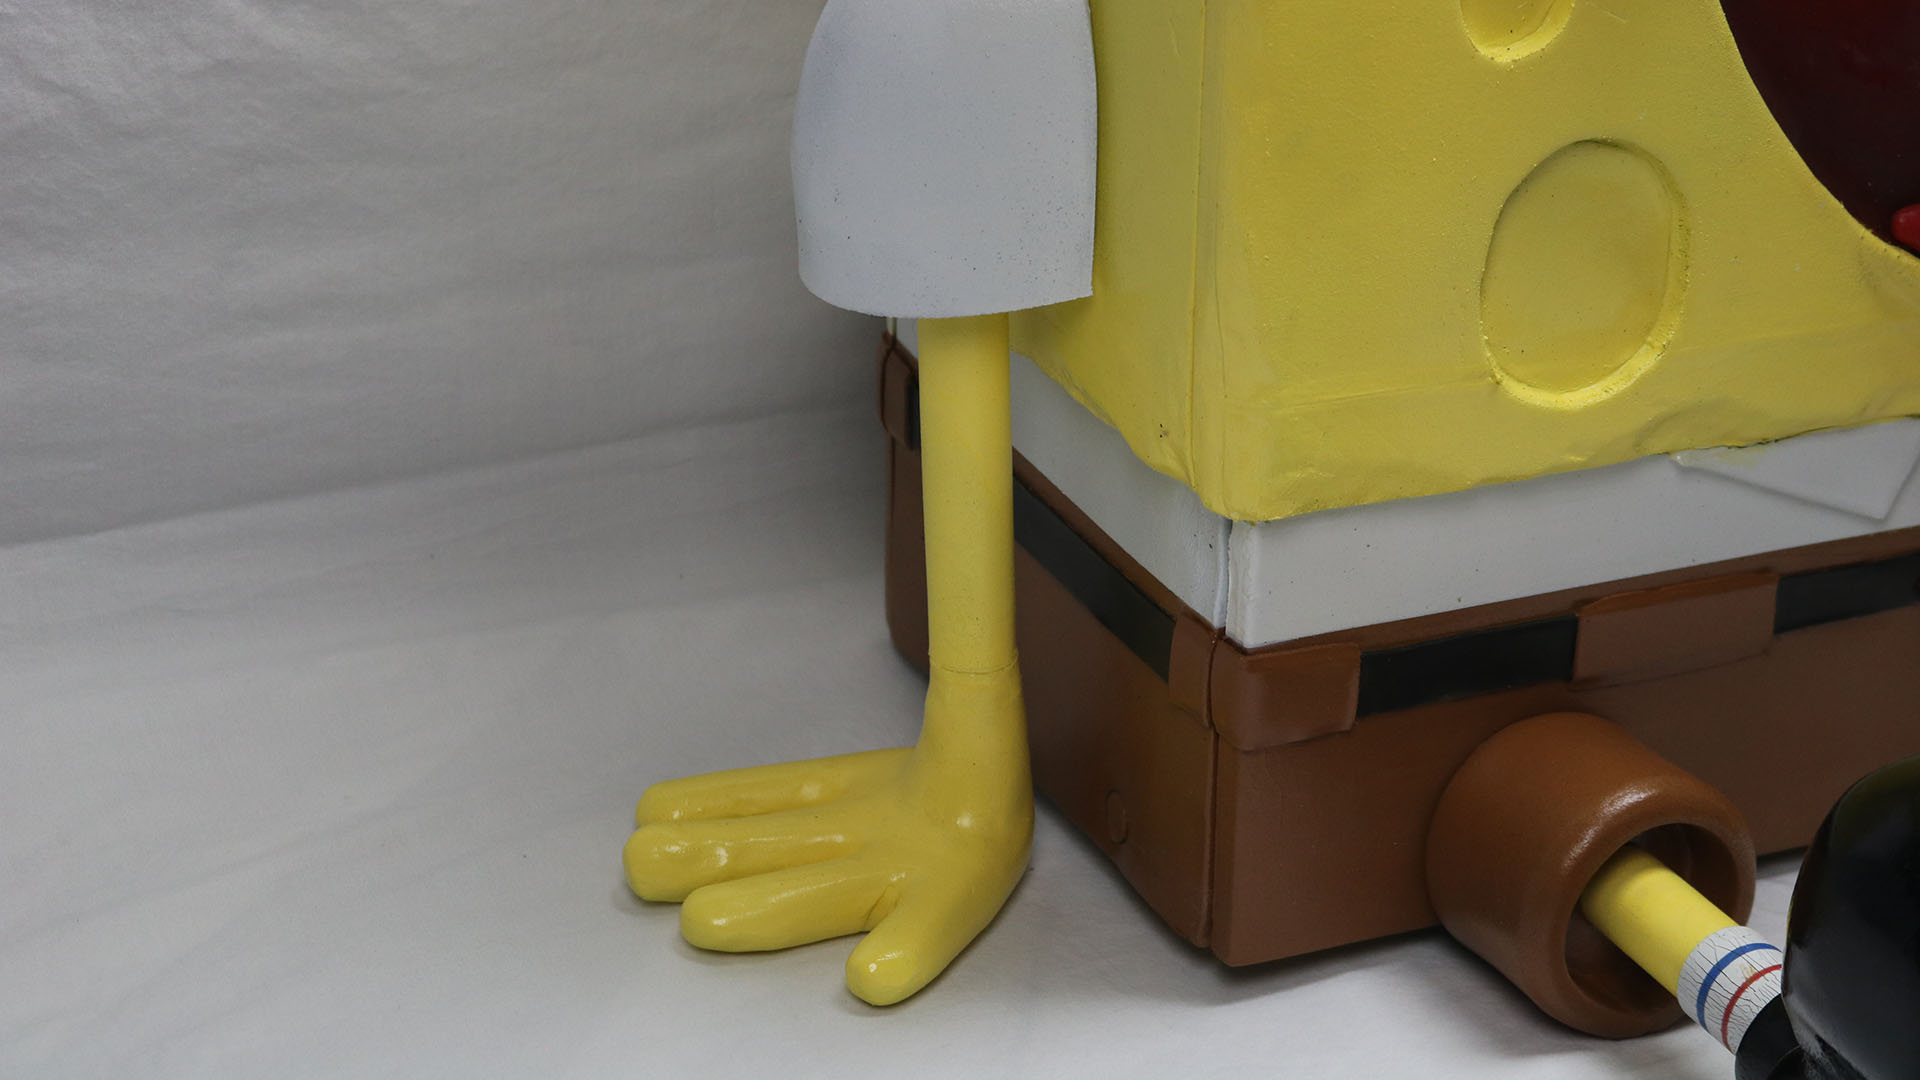 The arms of the spongebob squarepants gaming pc